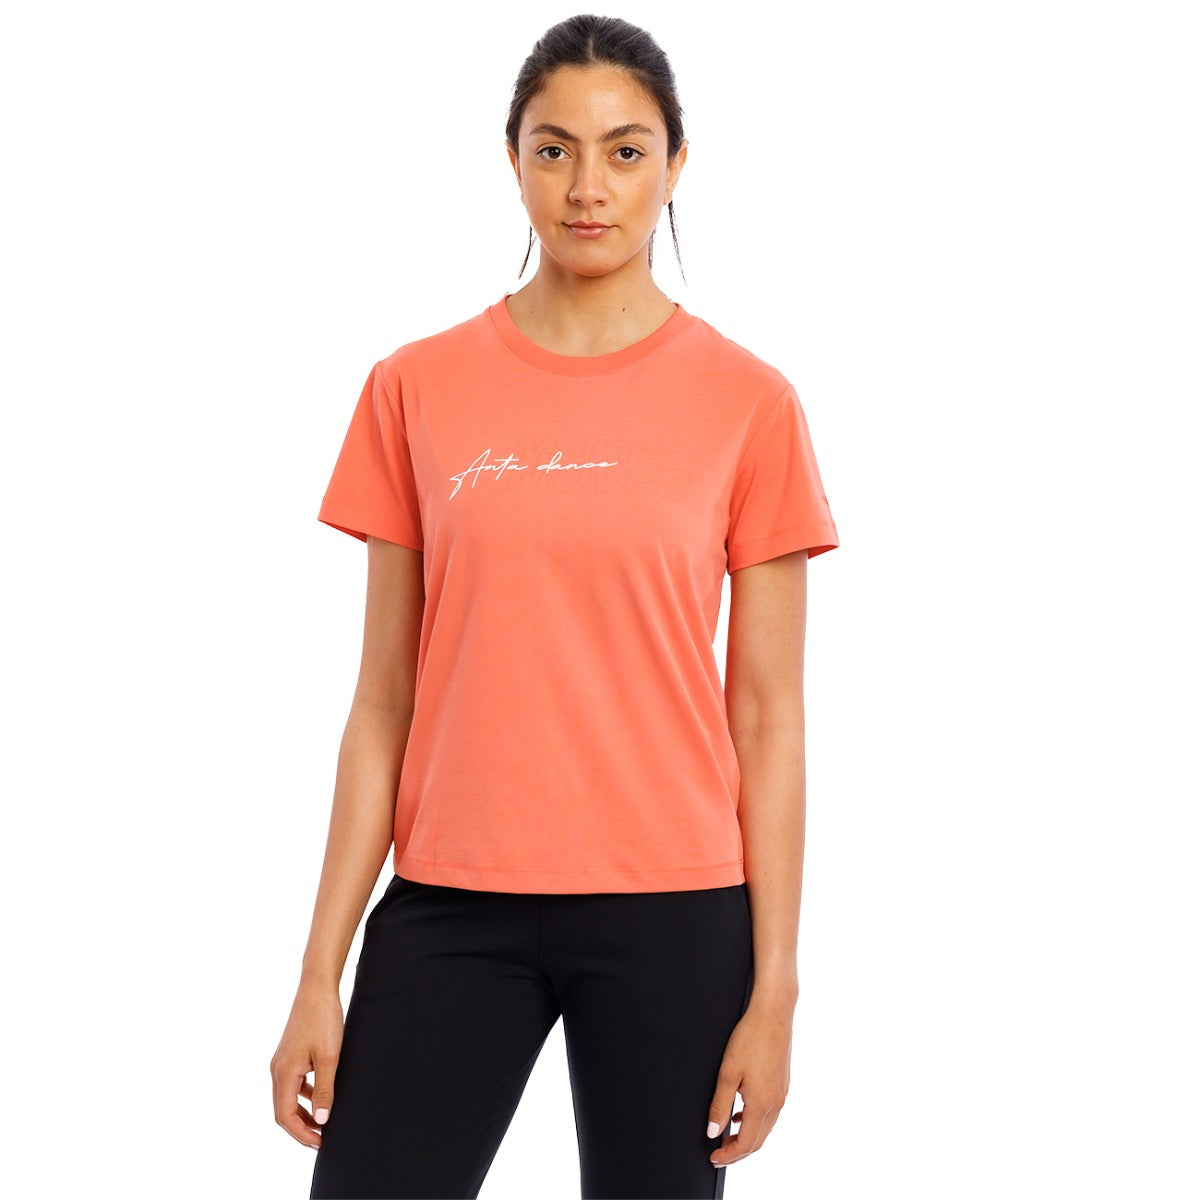 Anta Cross-Training Cotton T-Shirt For Women, Orange